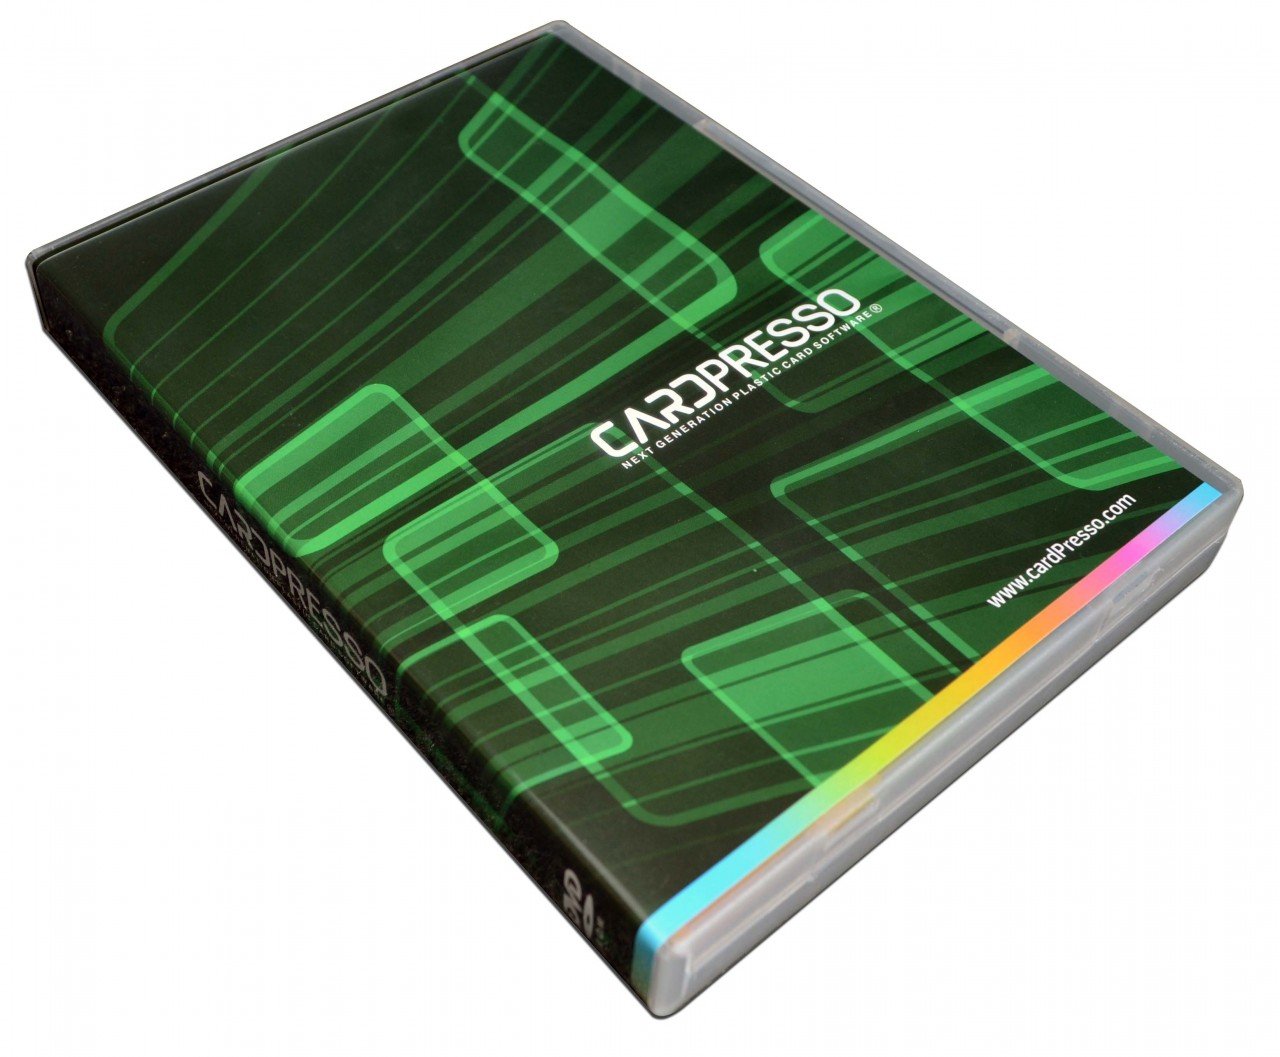 CardPresso ID Card Software XXL Edition